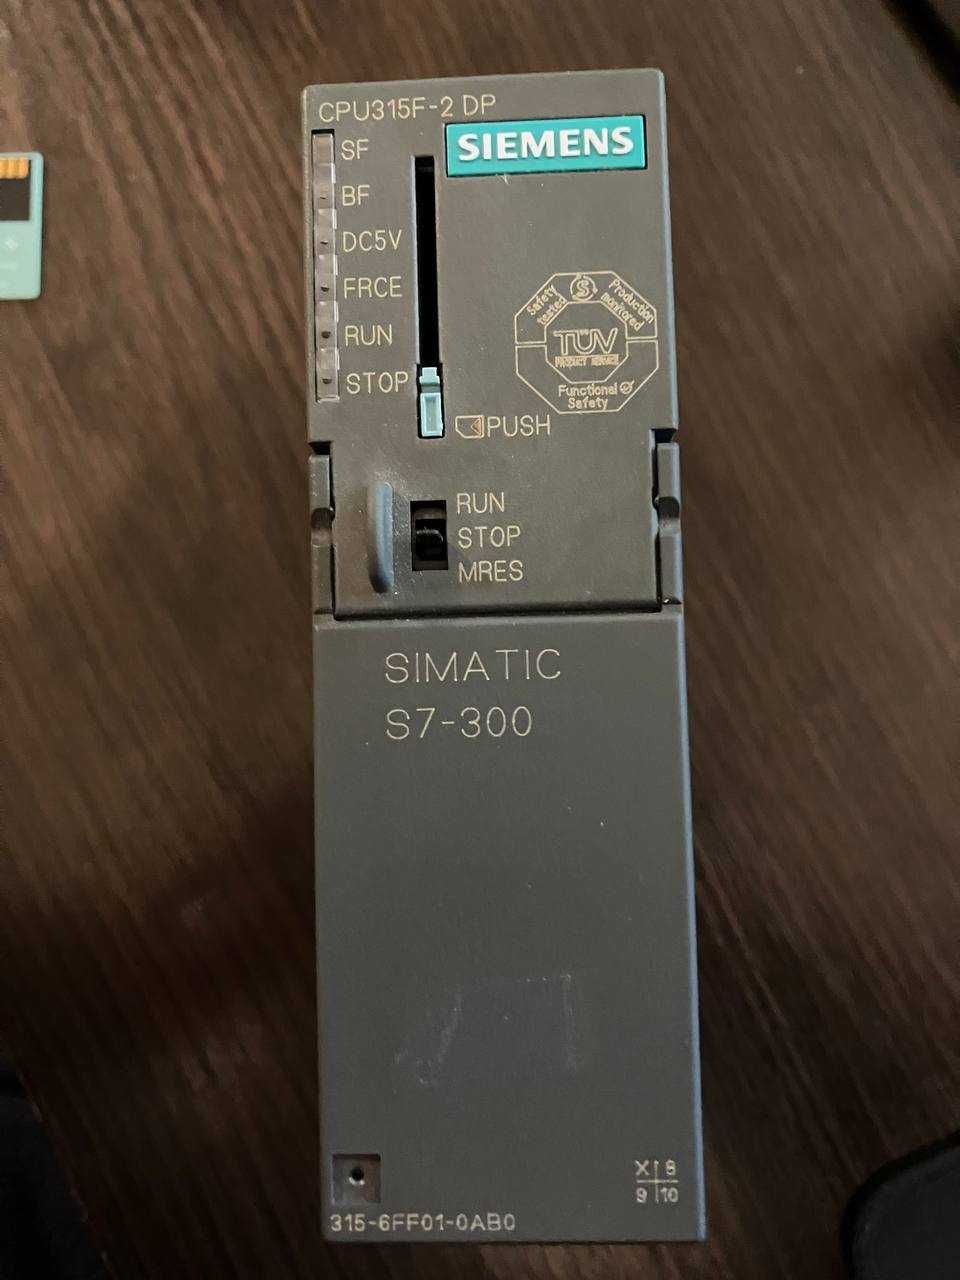 Siemens Simatic S7-300 6ES7315-6FF01-0AB0, CPU315F-2 DP